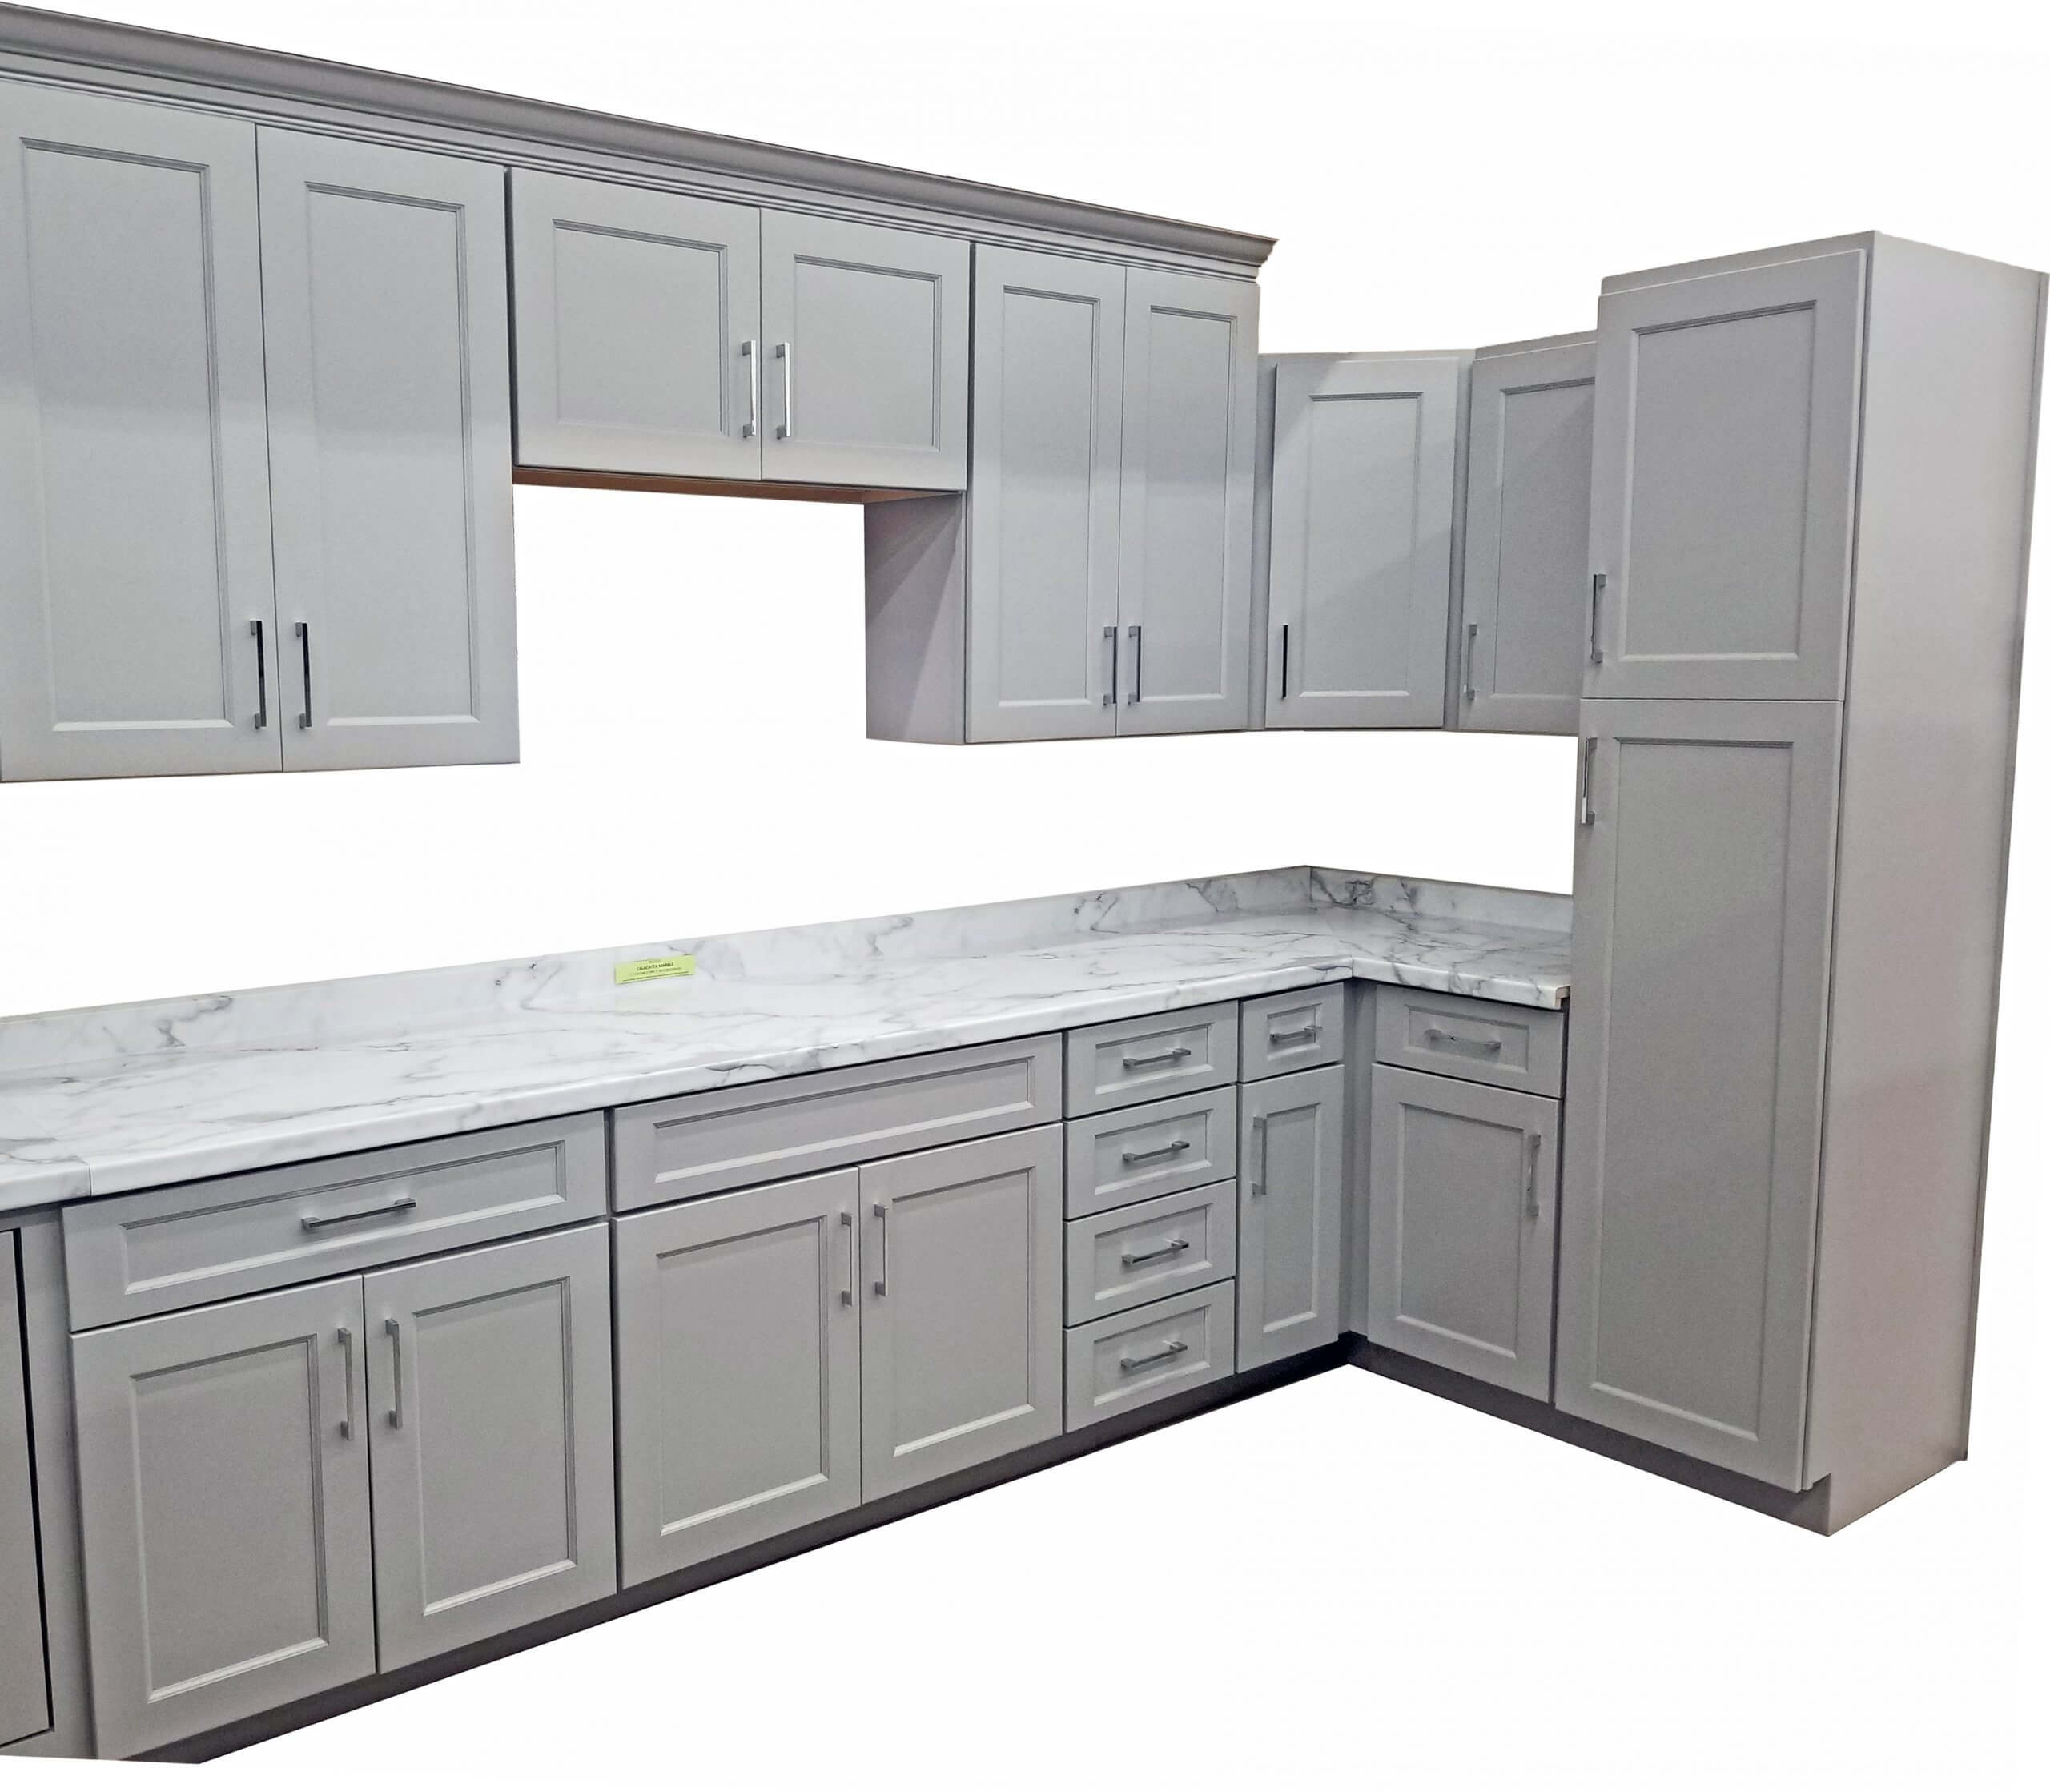 Own Limestone Kitchen Cabinets